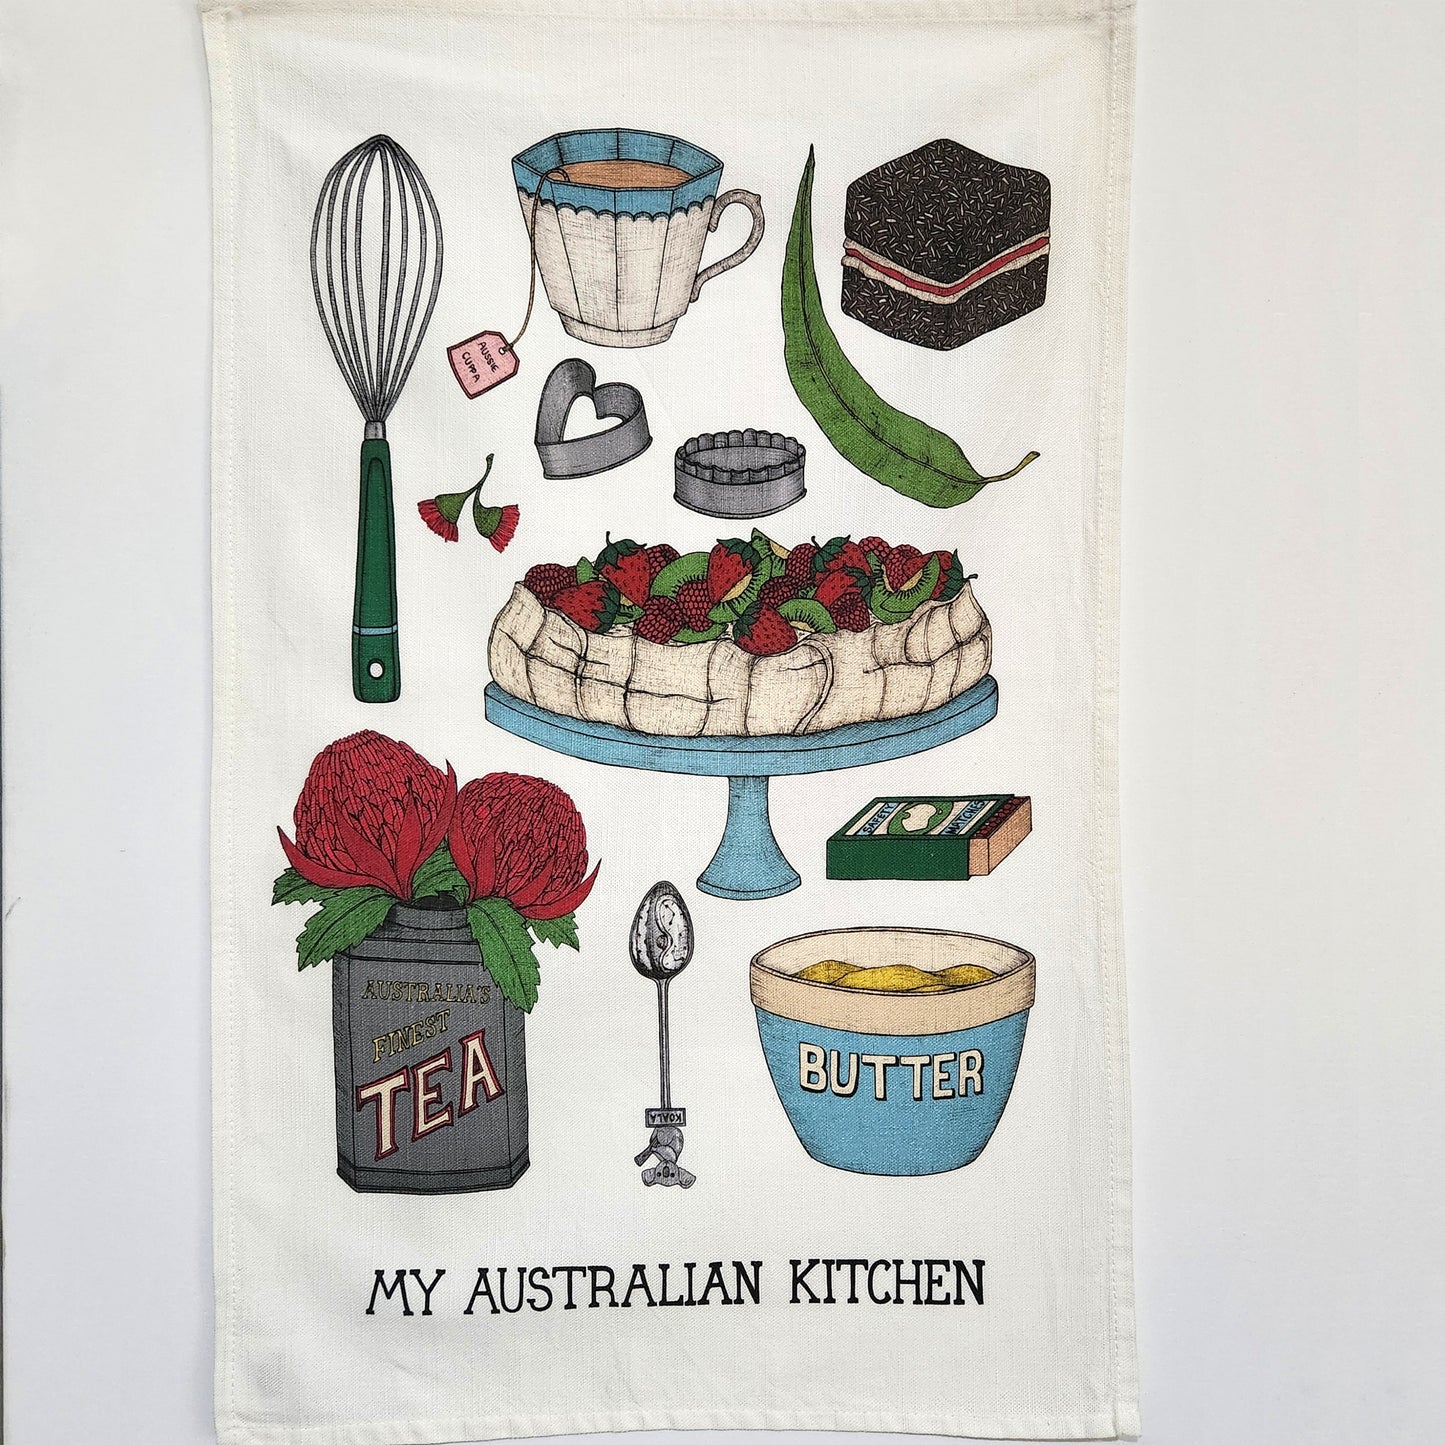 Quirky Australian tea towel illustrated with Australian kitchen items.